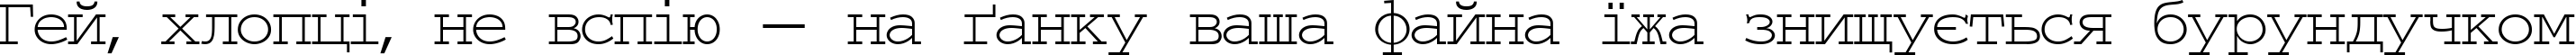 Пример написания шрифтом TypeWriter Normal текста на украинском